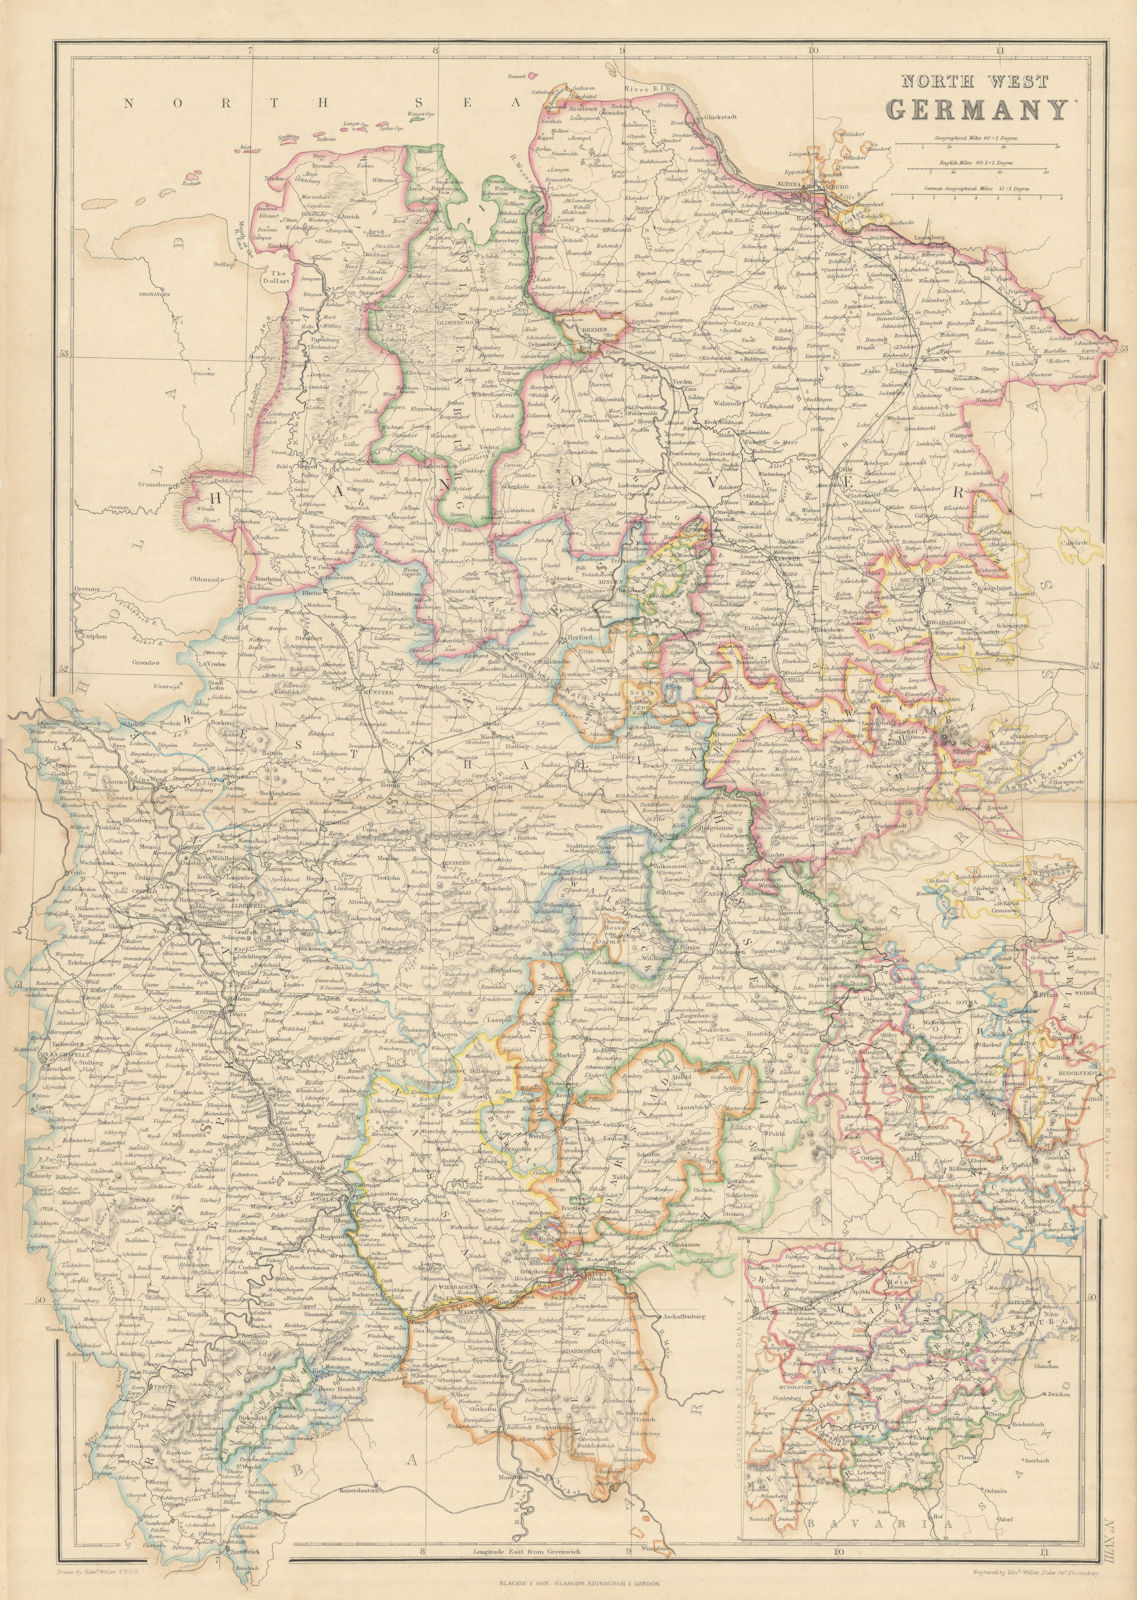 North-West Germany. Hanover, Rhenish Prussia, Nassau, Hesse. WELLER 1860 map